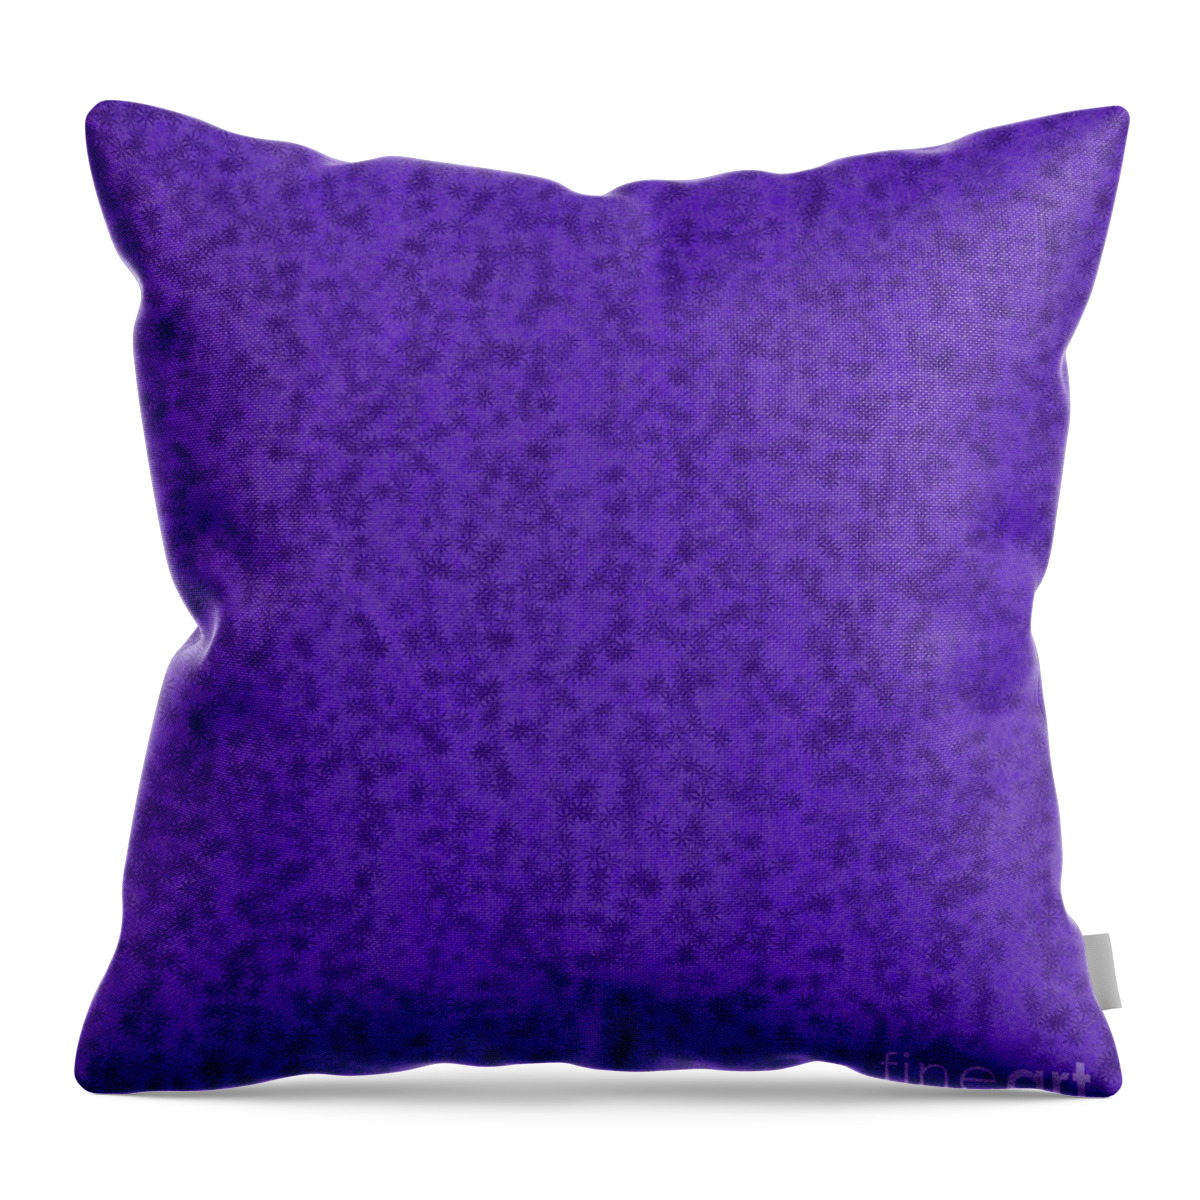 Purple Passion Throw Pillow featuring the digital art Purple Passion by Annette M Stevenson